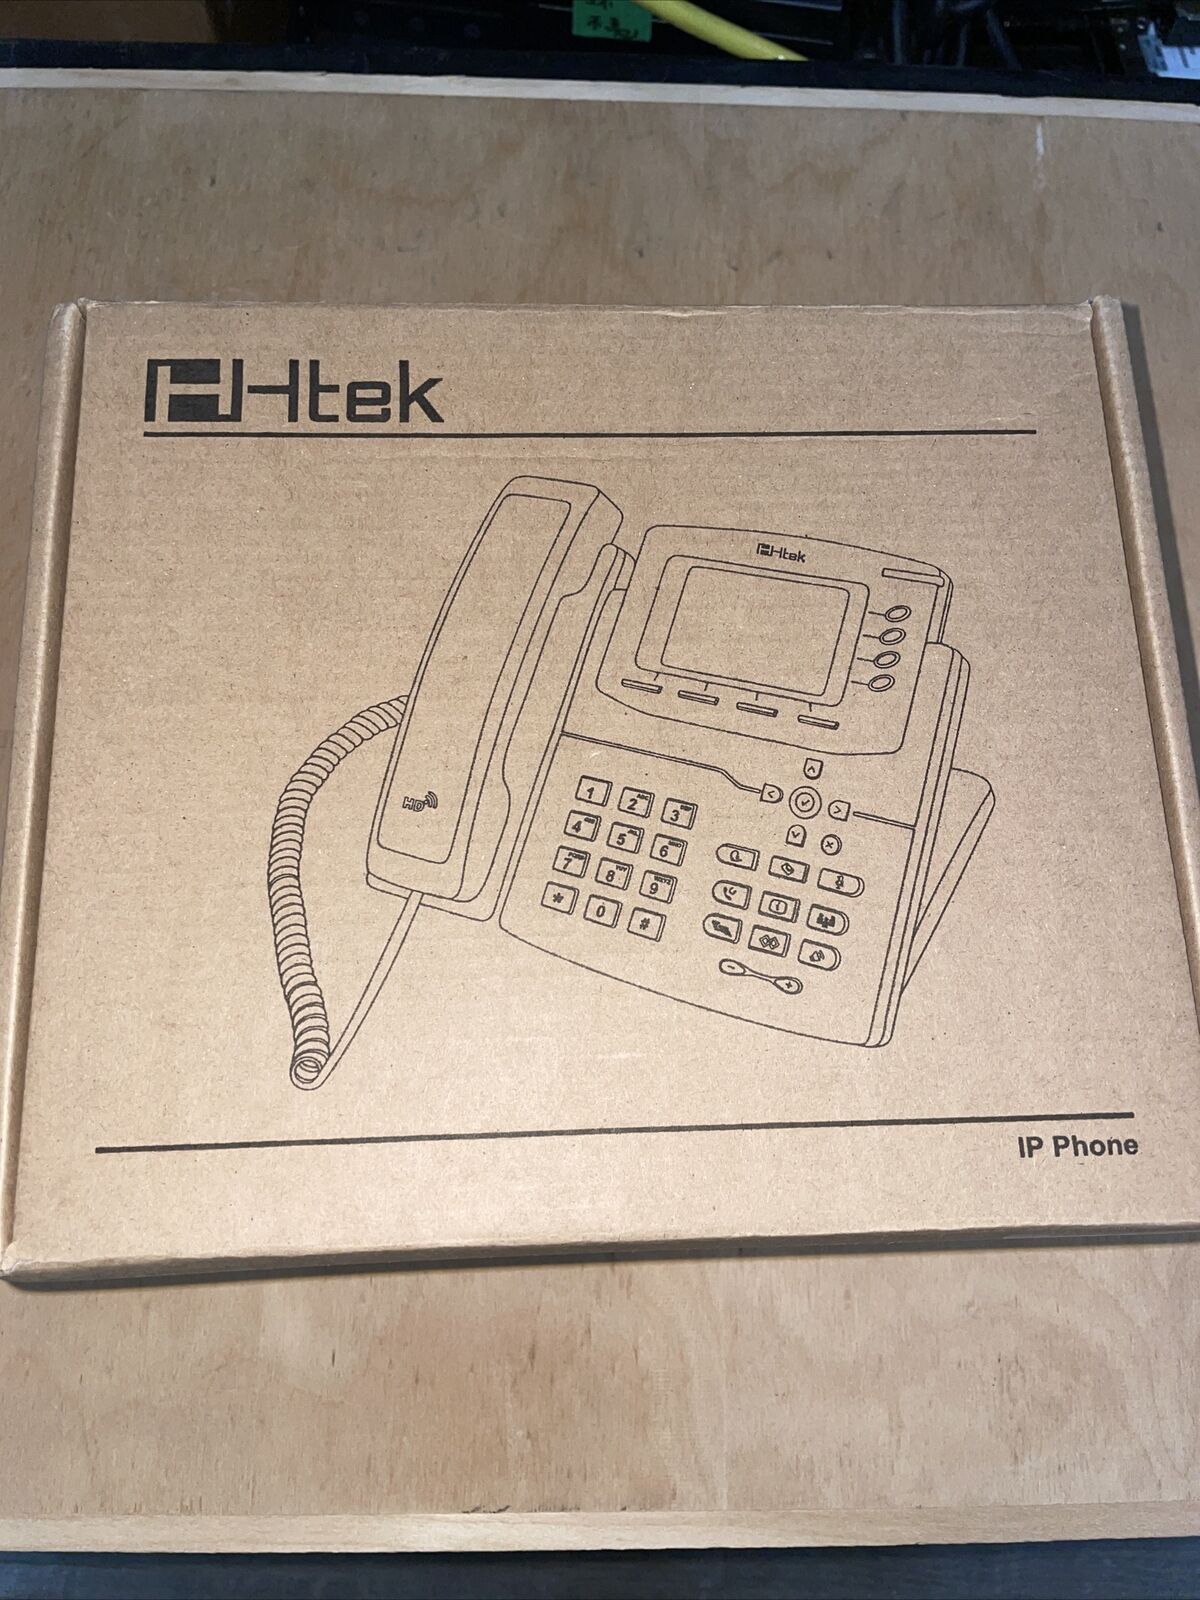 * NEW IN BOX HTek 840P HTEK-UC840 Color IP Phone